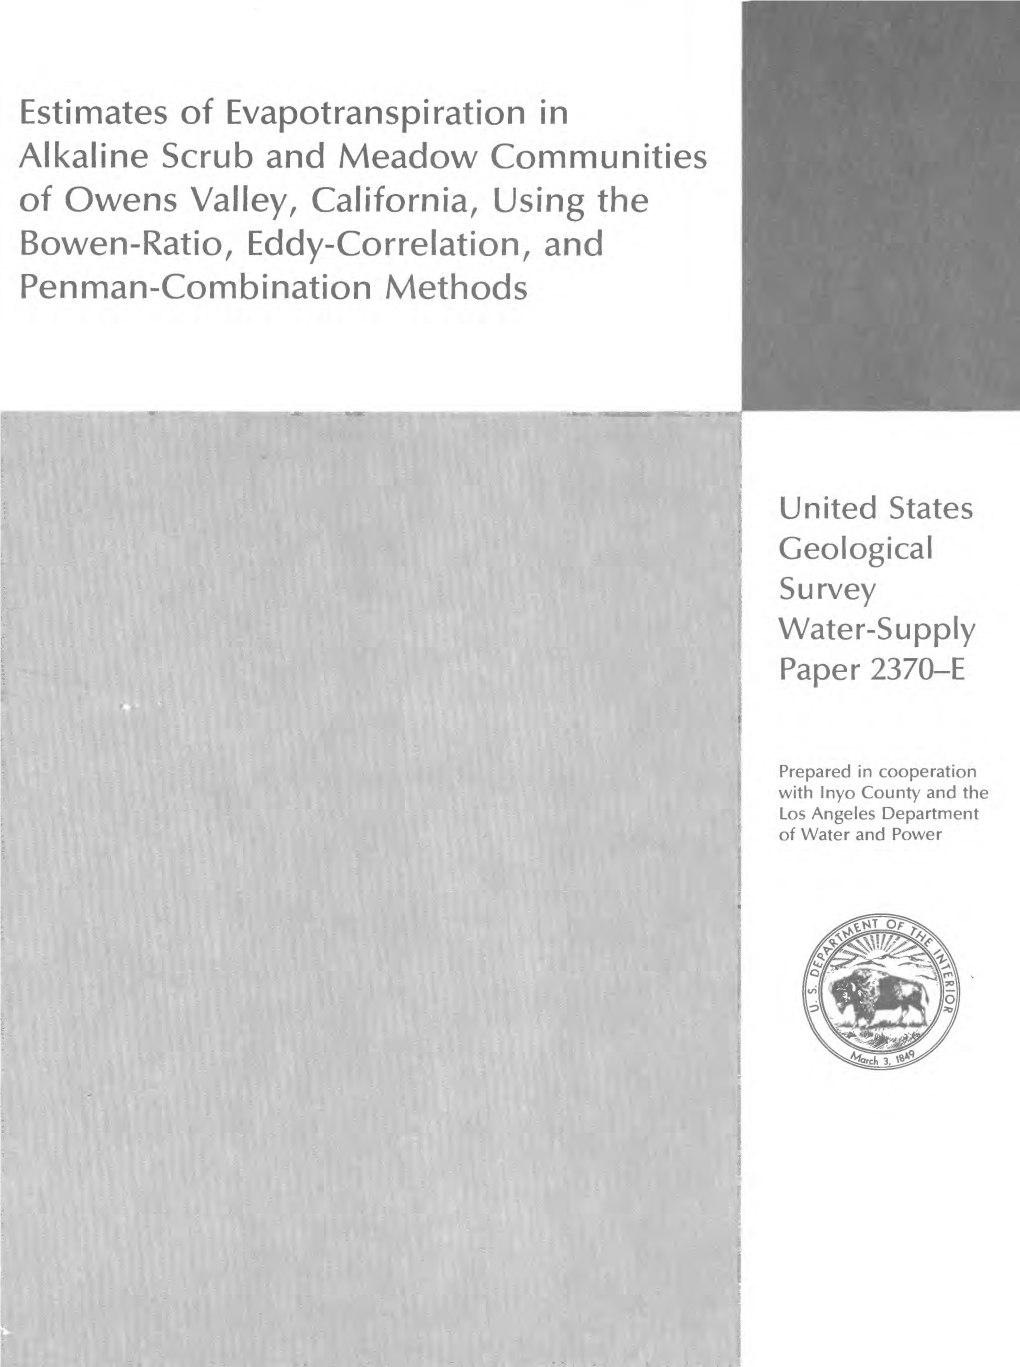 Estimates of Evapotranspiration in Alkaline Scrub and Meadow Communities of Owens Valley, California, Using the Bowen-Ratio